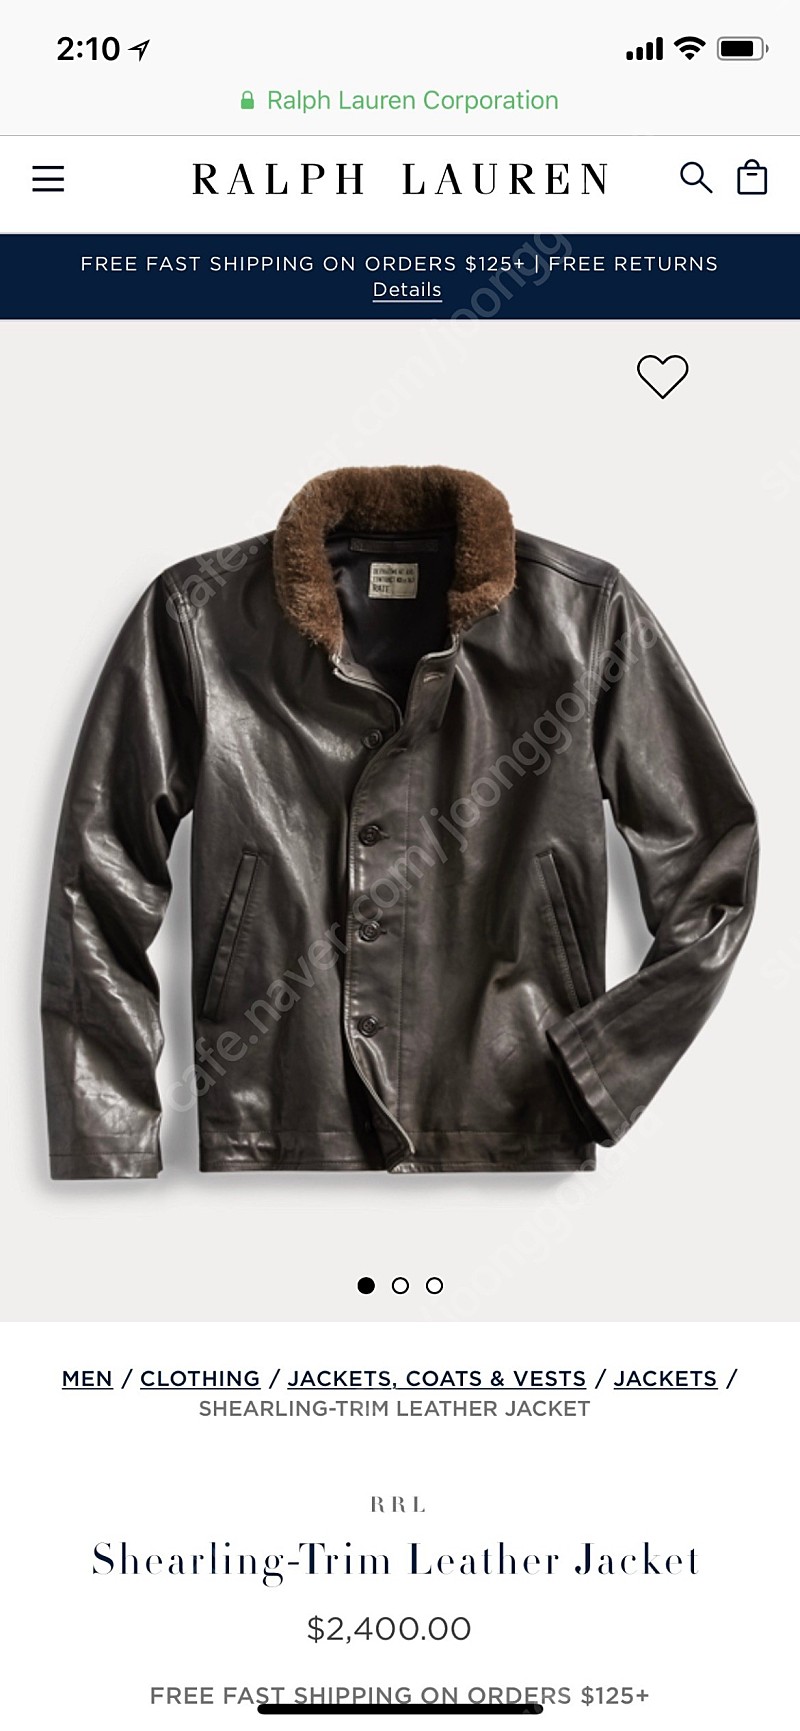 RRL N-1 leather jacket